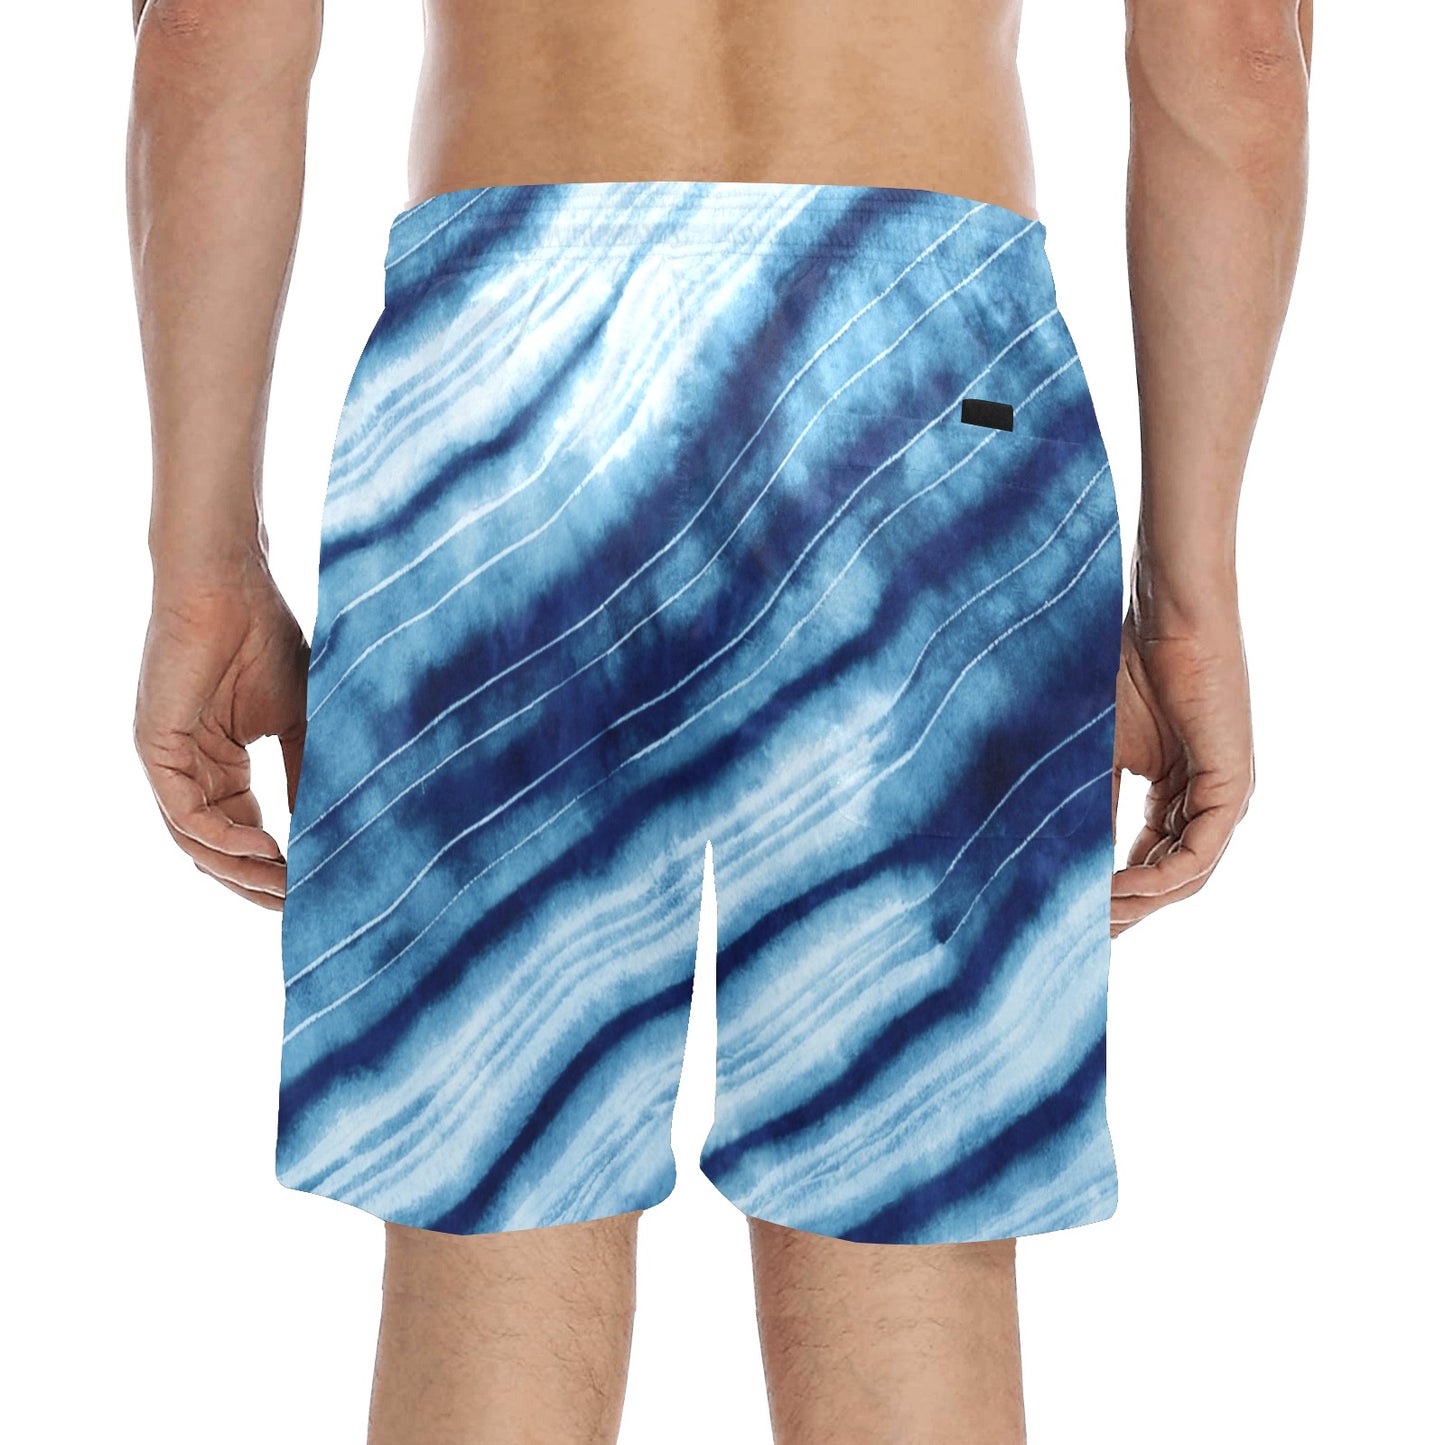 Tie Dye Men Swim Trunks, Blue Shibori Mid Length Shorts Beach Pockets Mesh Lining Drawstring Boys Casual Bathing Suit Plus Size Swimwear Starcove Fashion